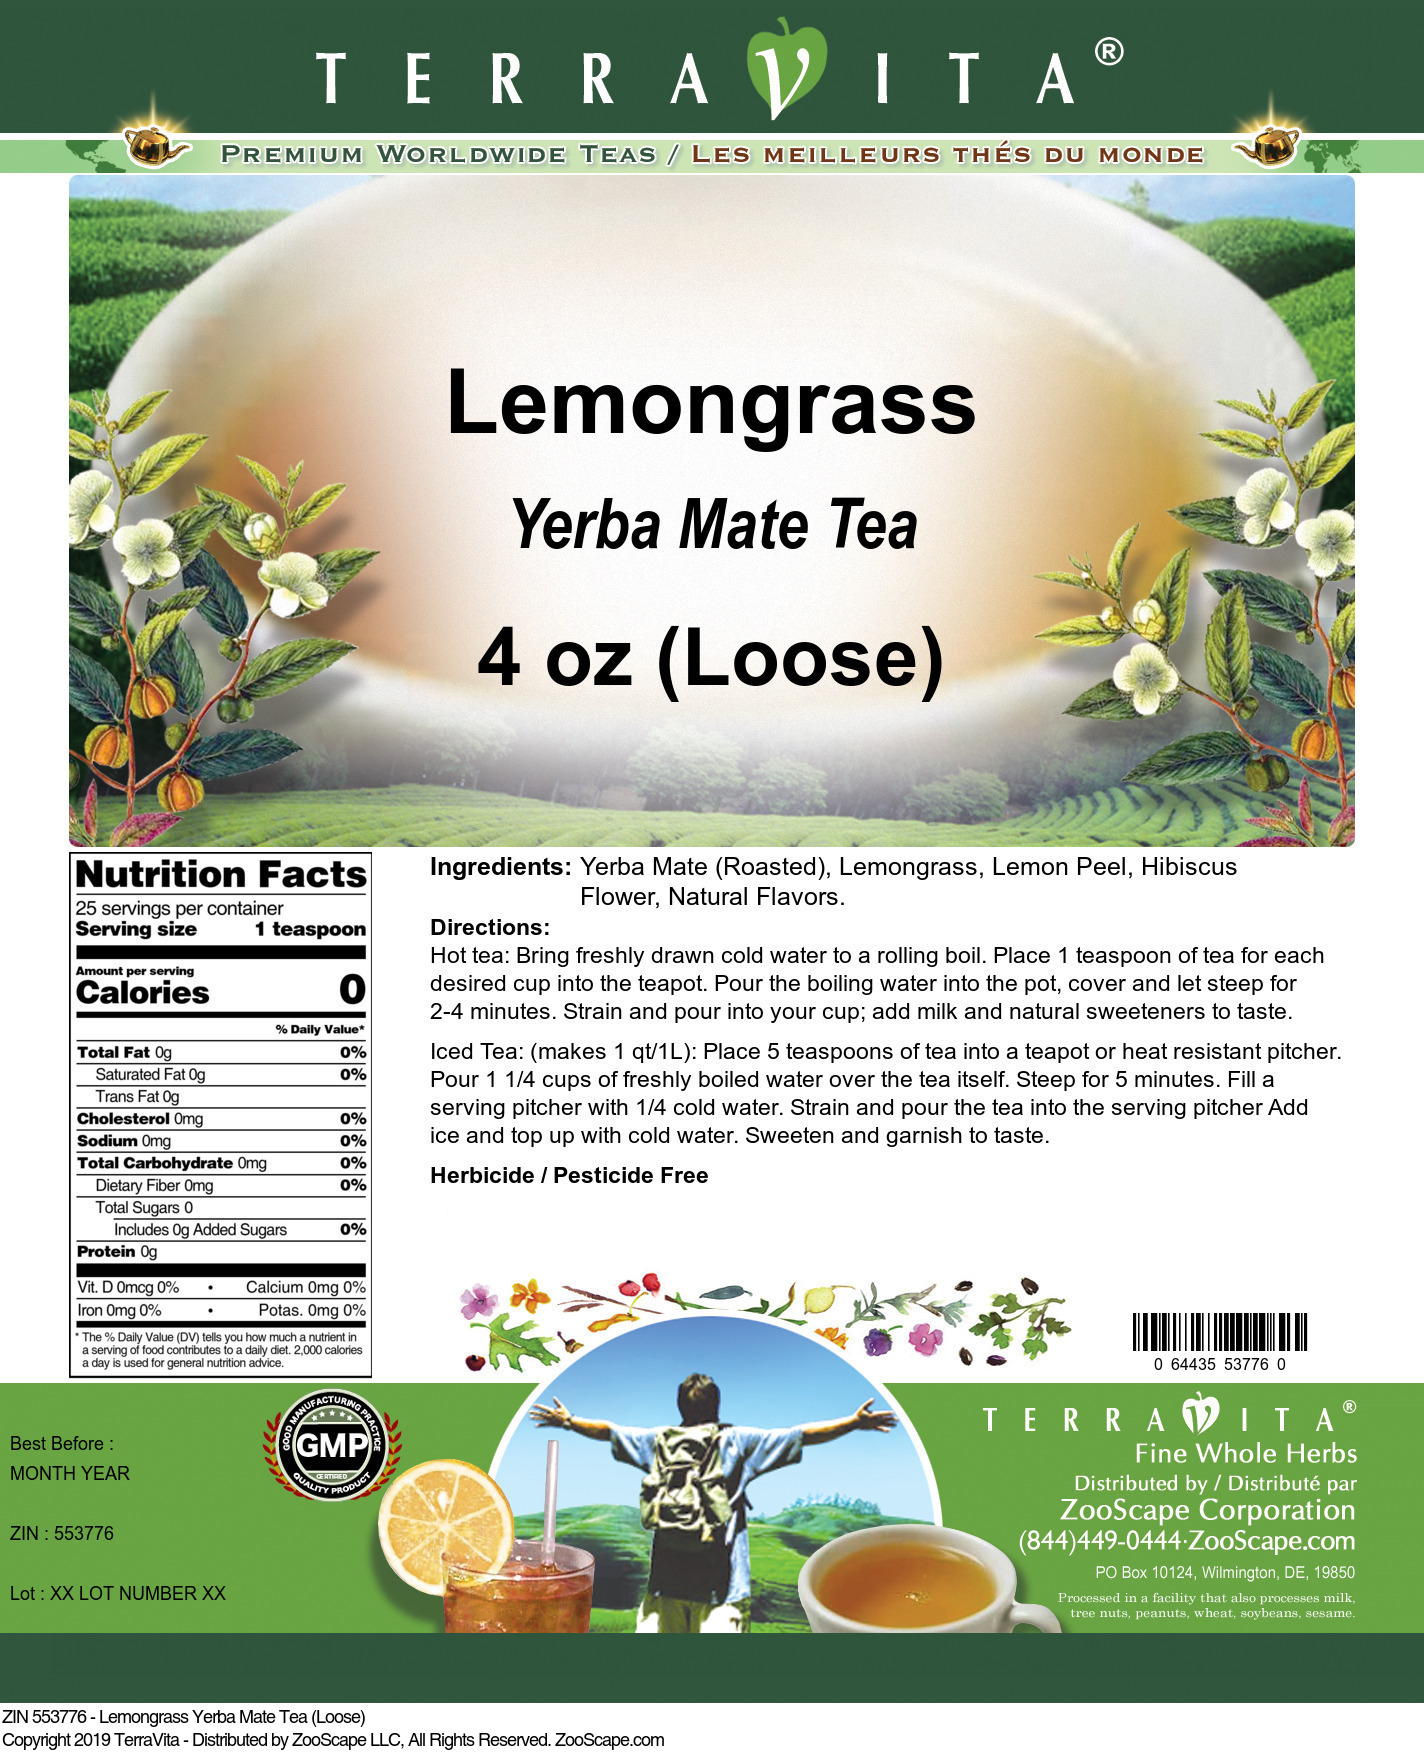 Lemongrass Yerba Mate Tea (Loose) - Label